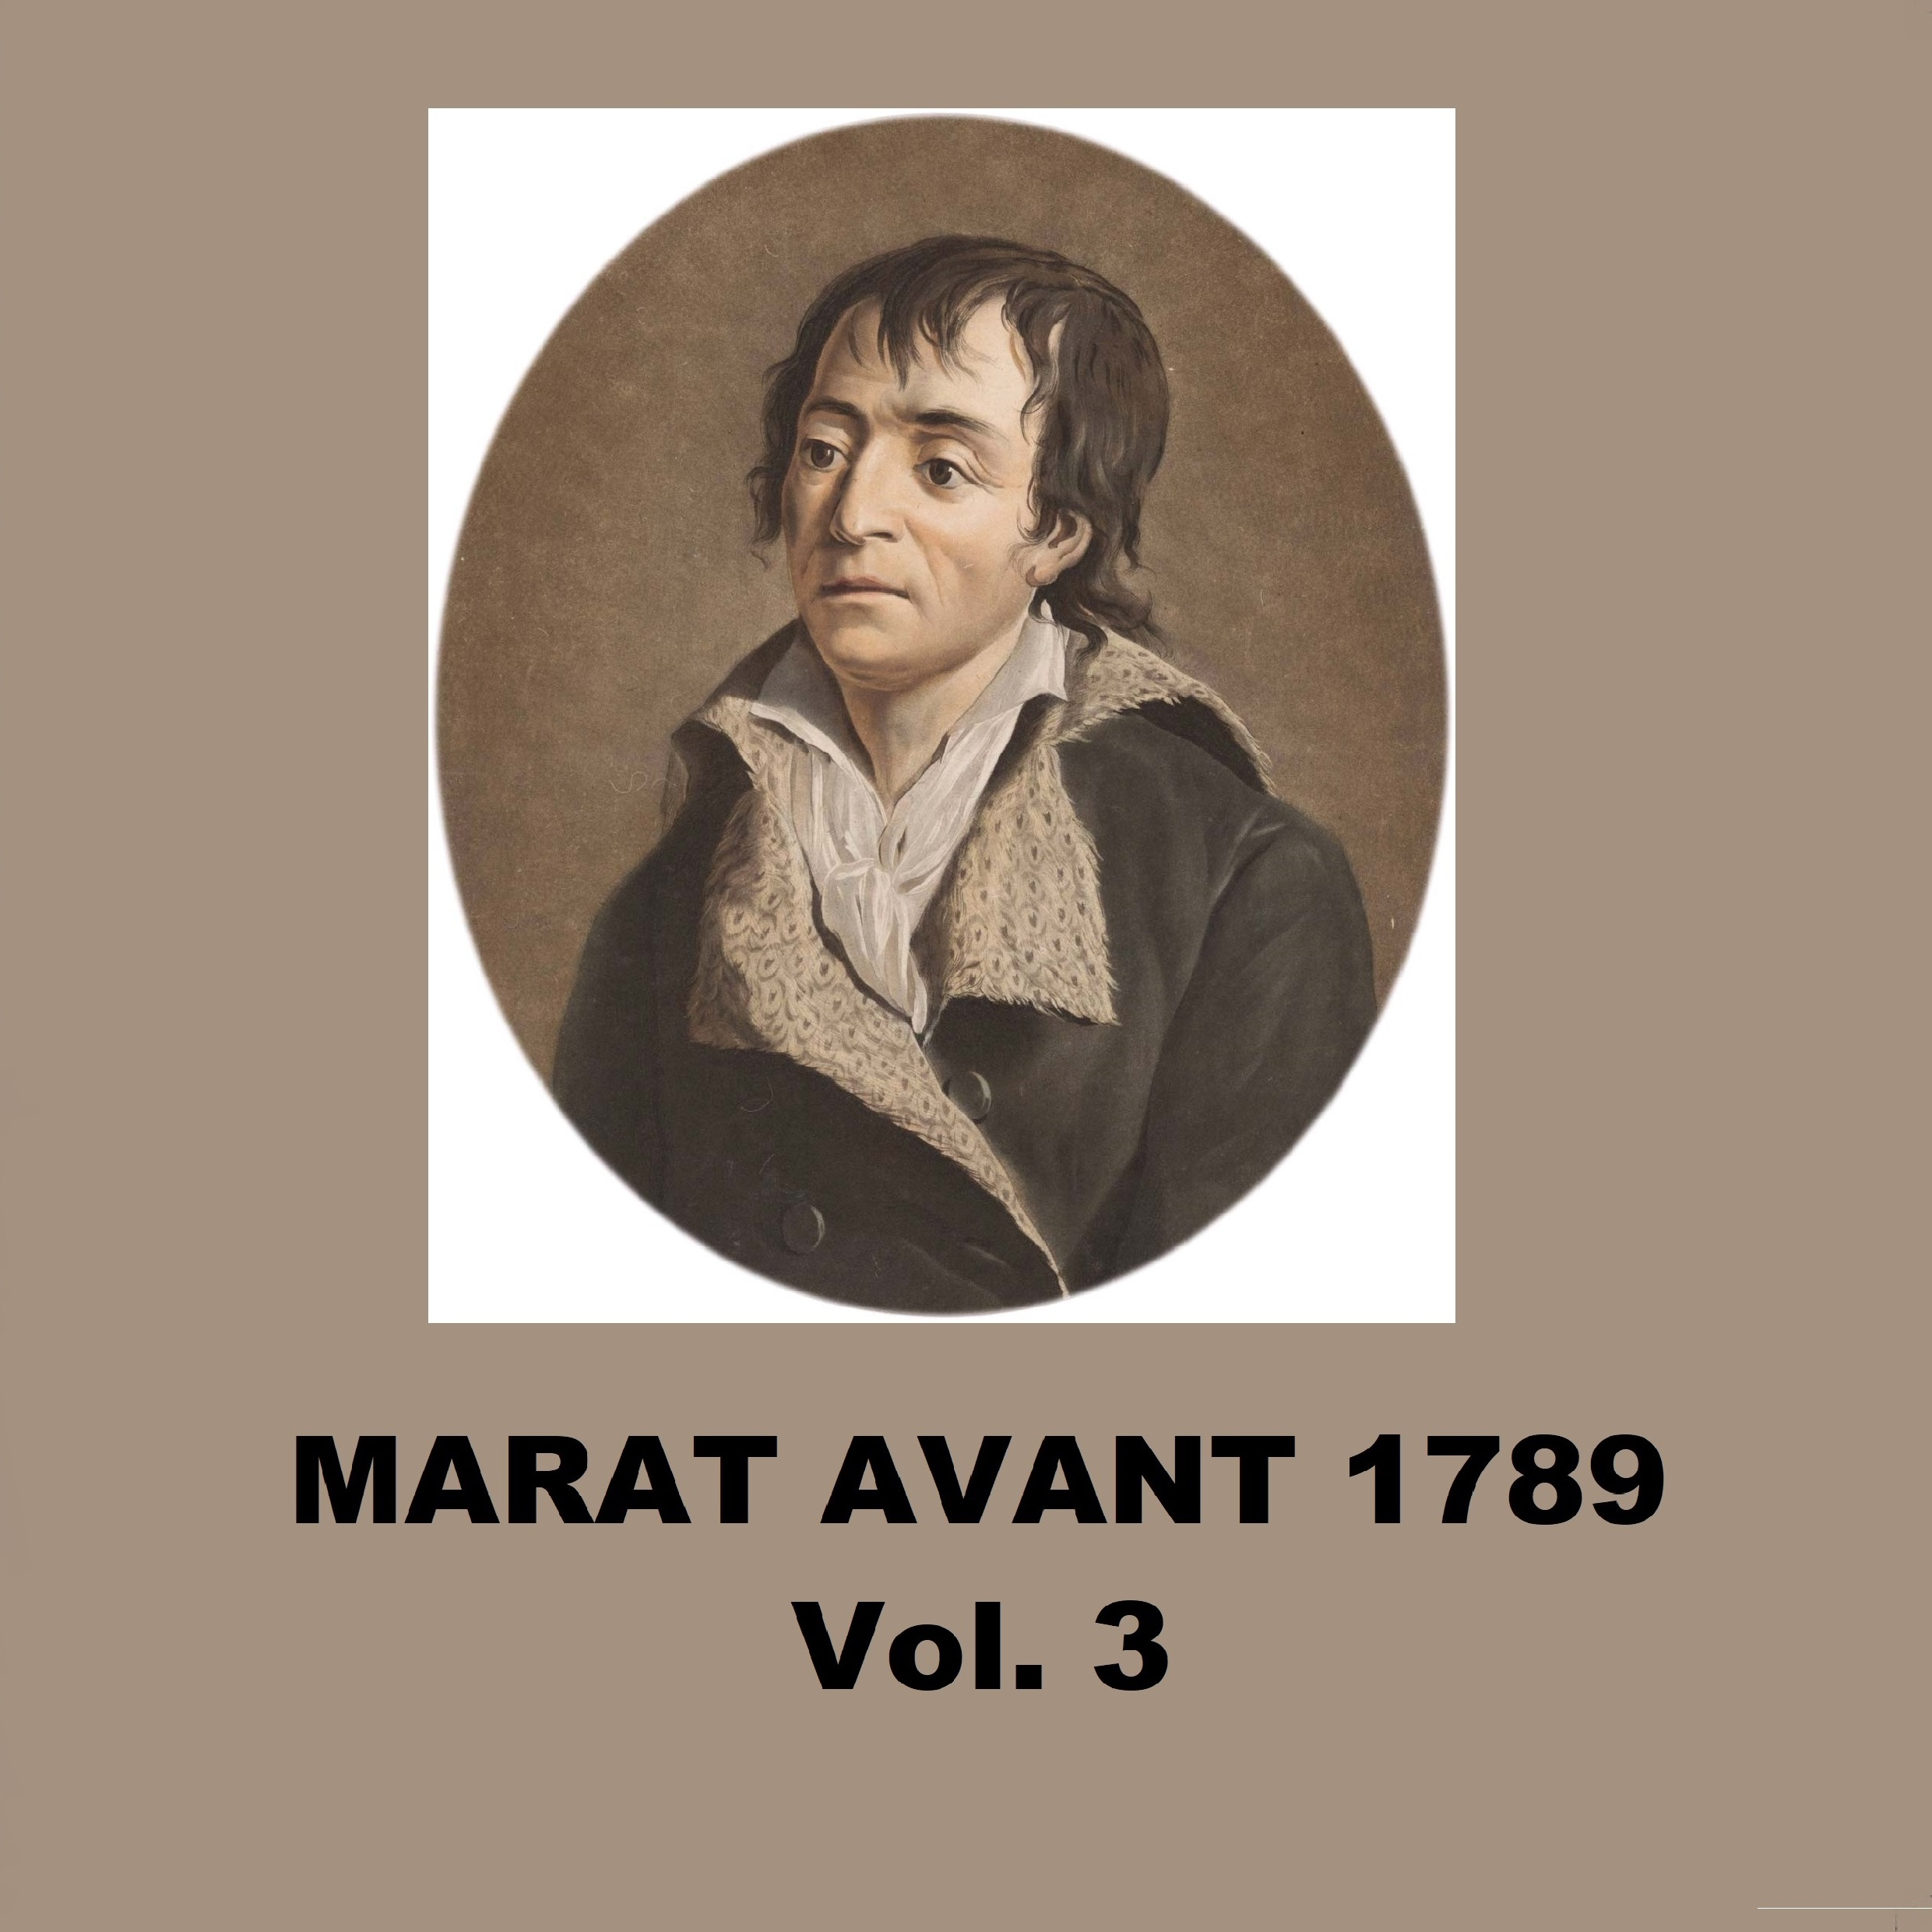 Marat avant 1789 vol.3